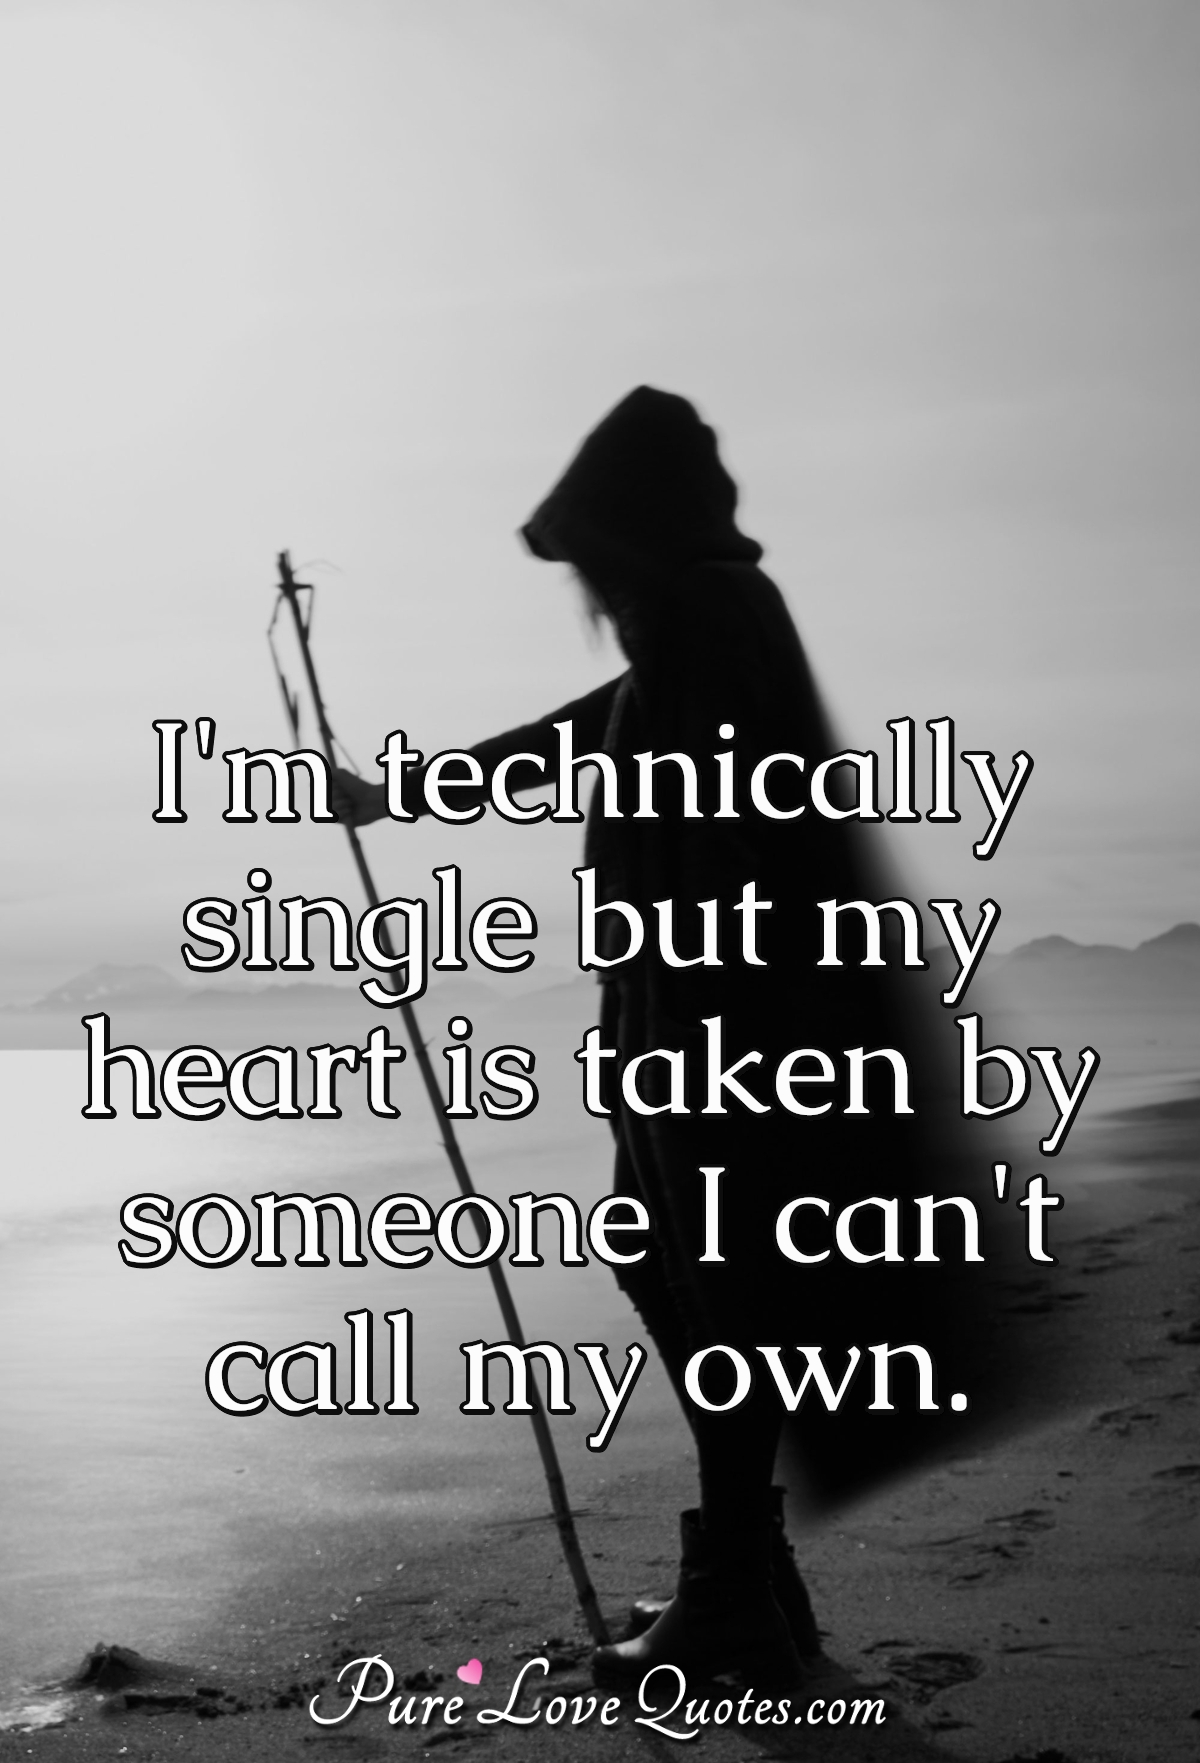 Single but taken quotes tumblr